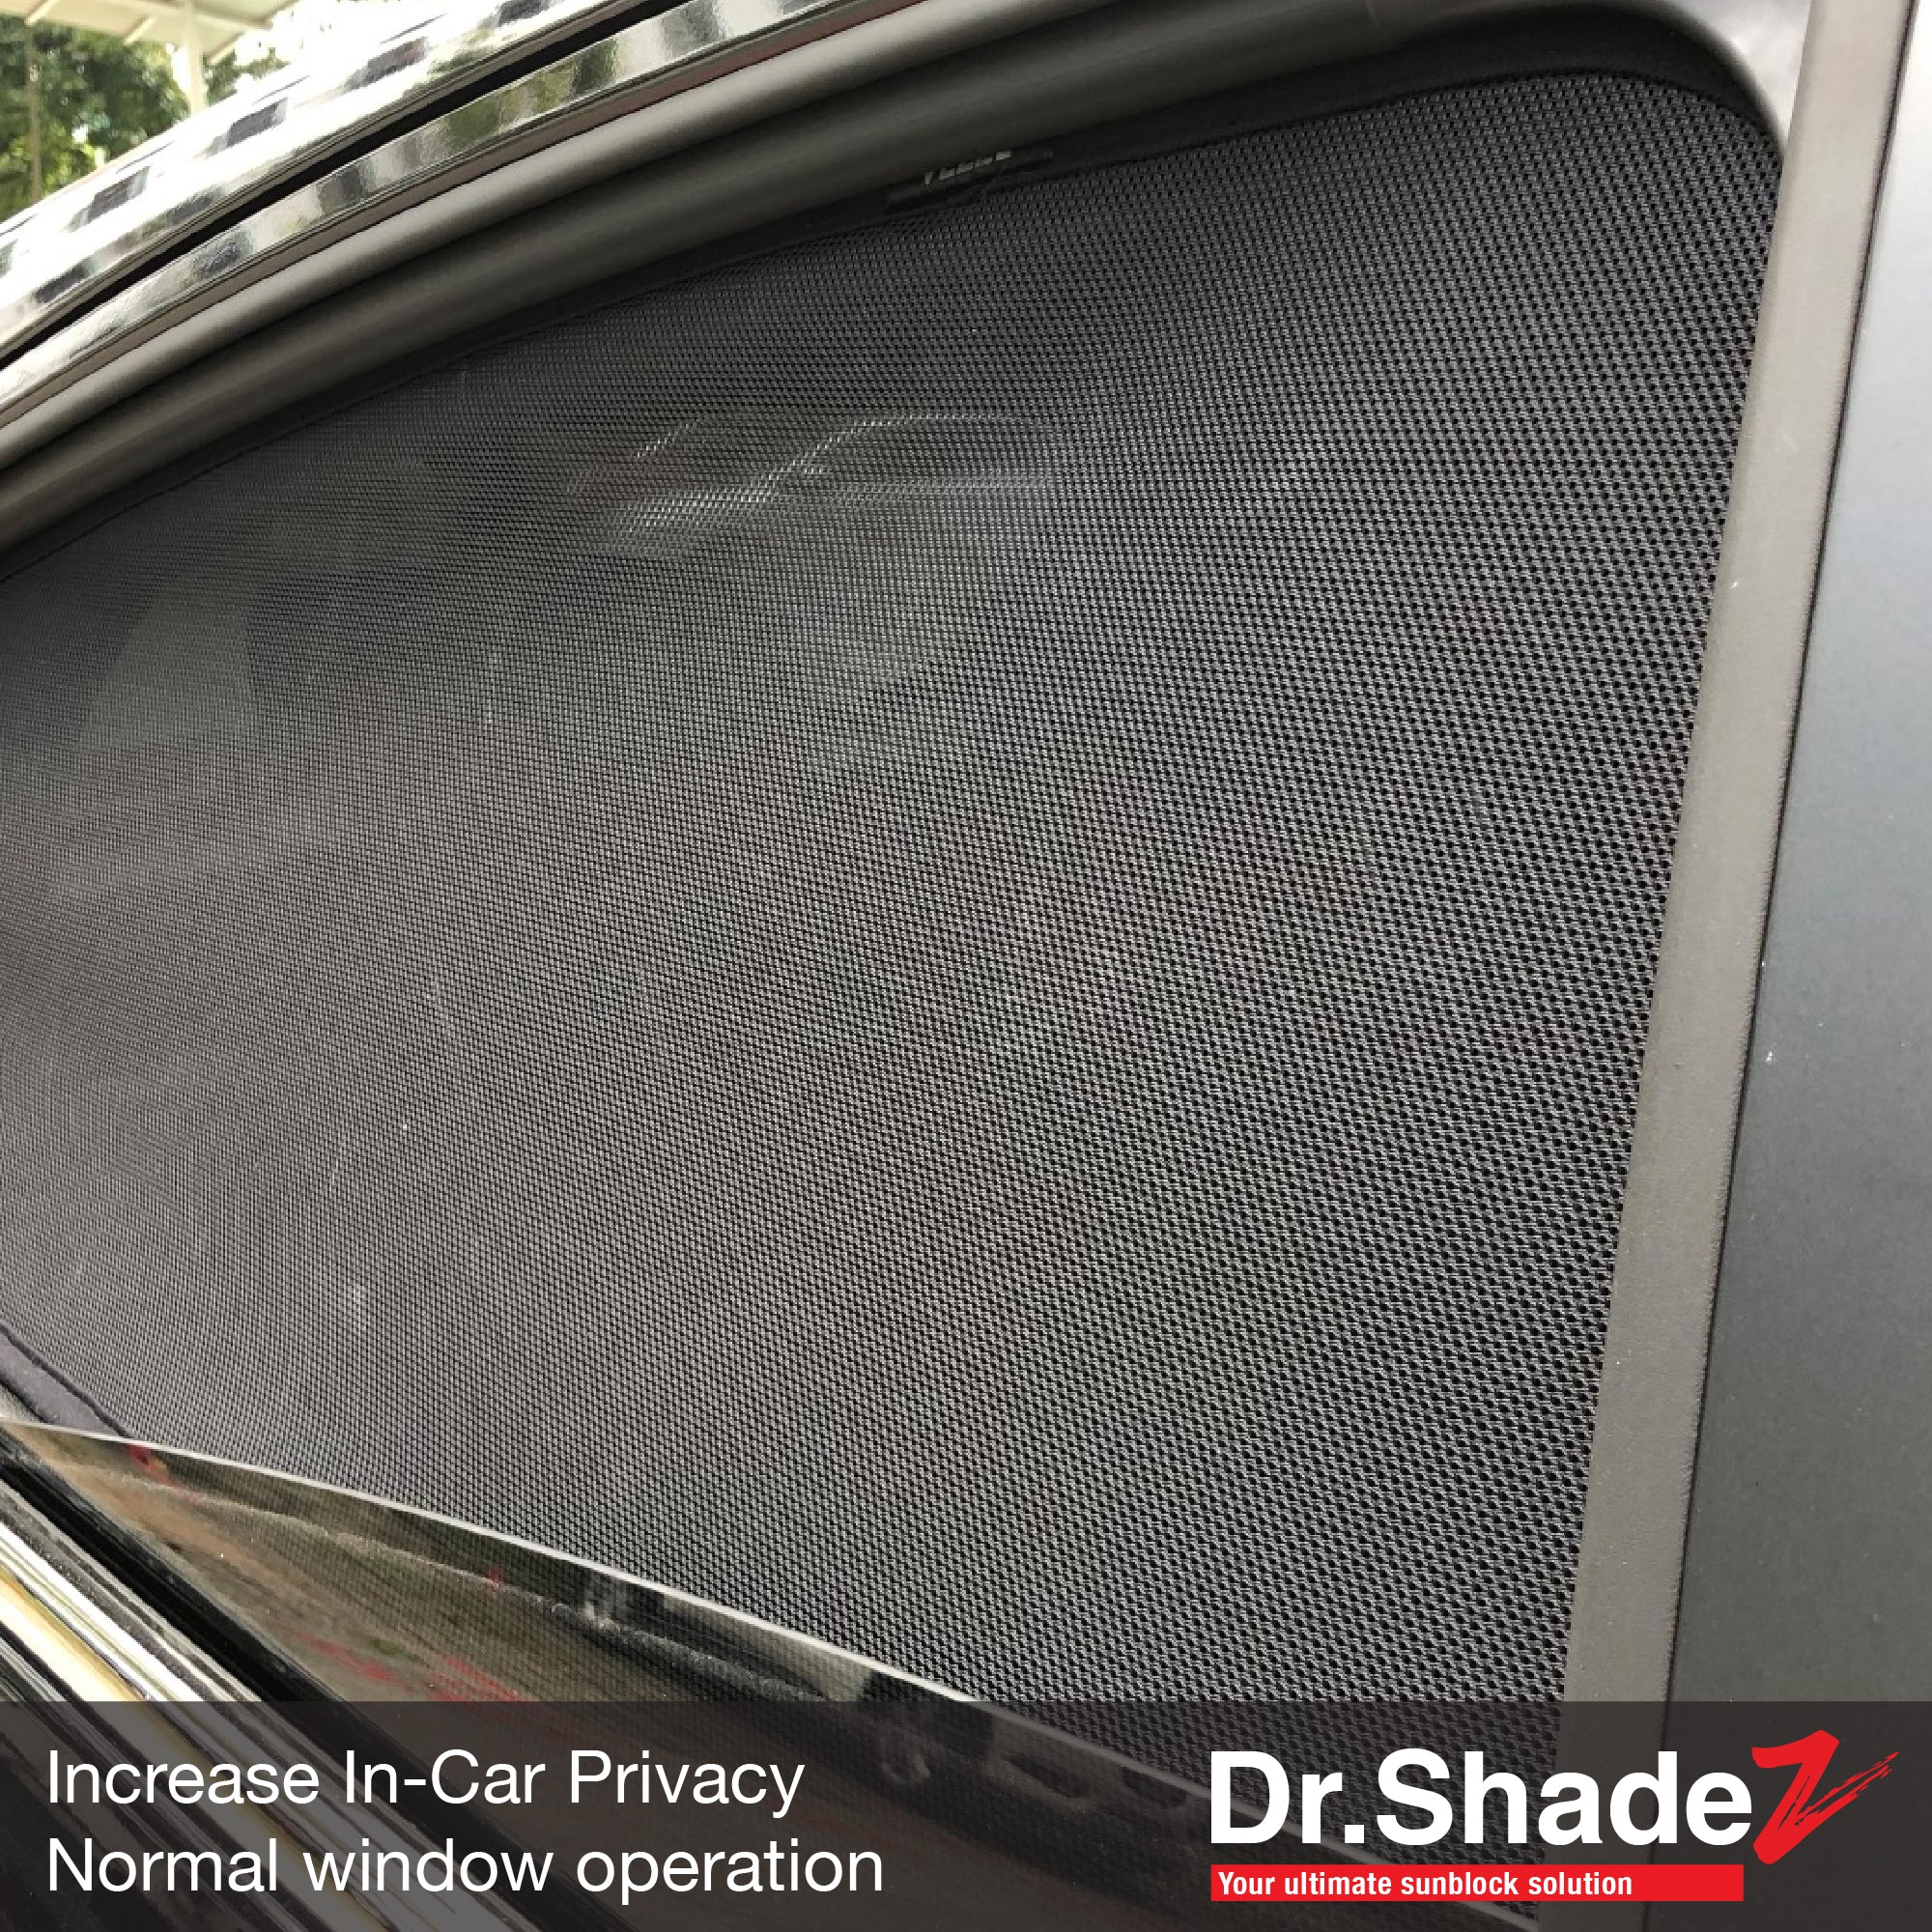 BMW 1 Series 2011-2019 2nd Generation (F20) Customised Luxury German Hatchback Car Window Magnetic Sunshades